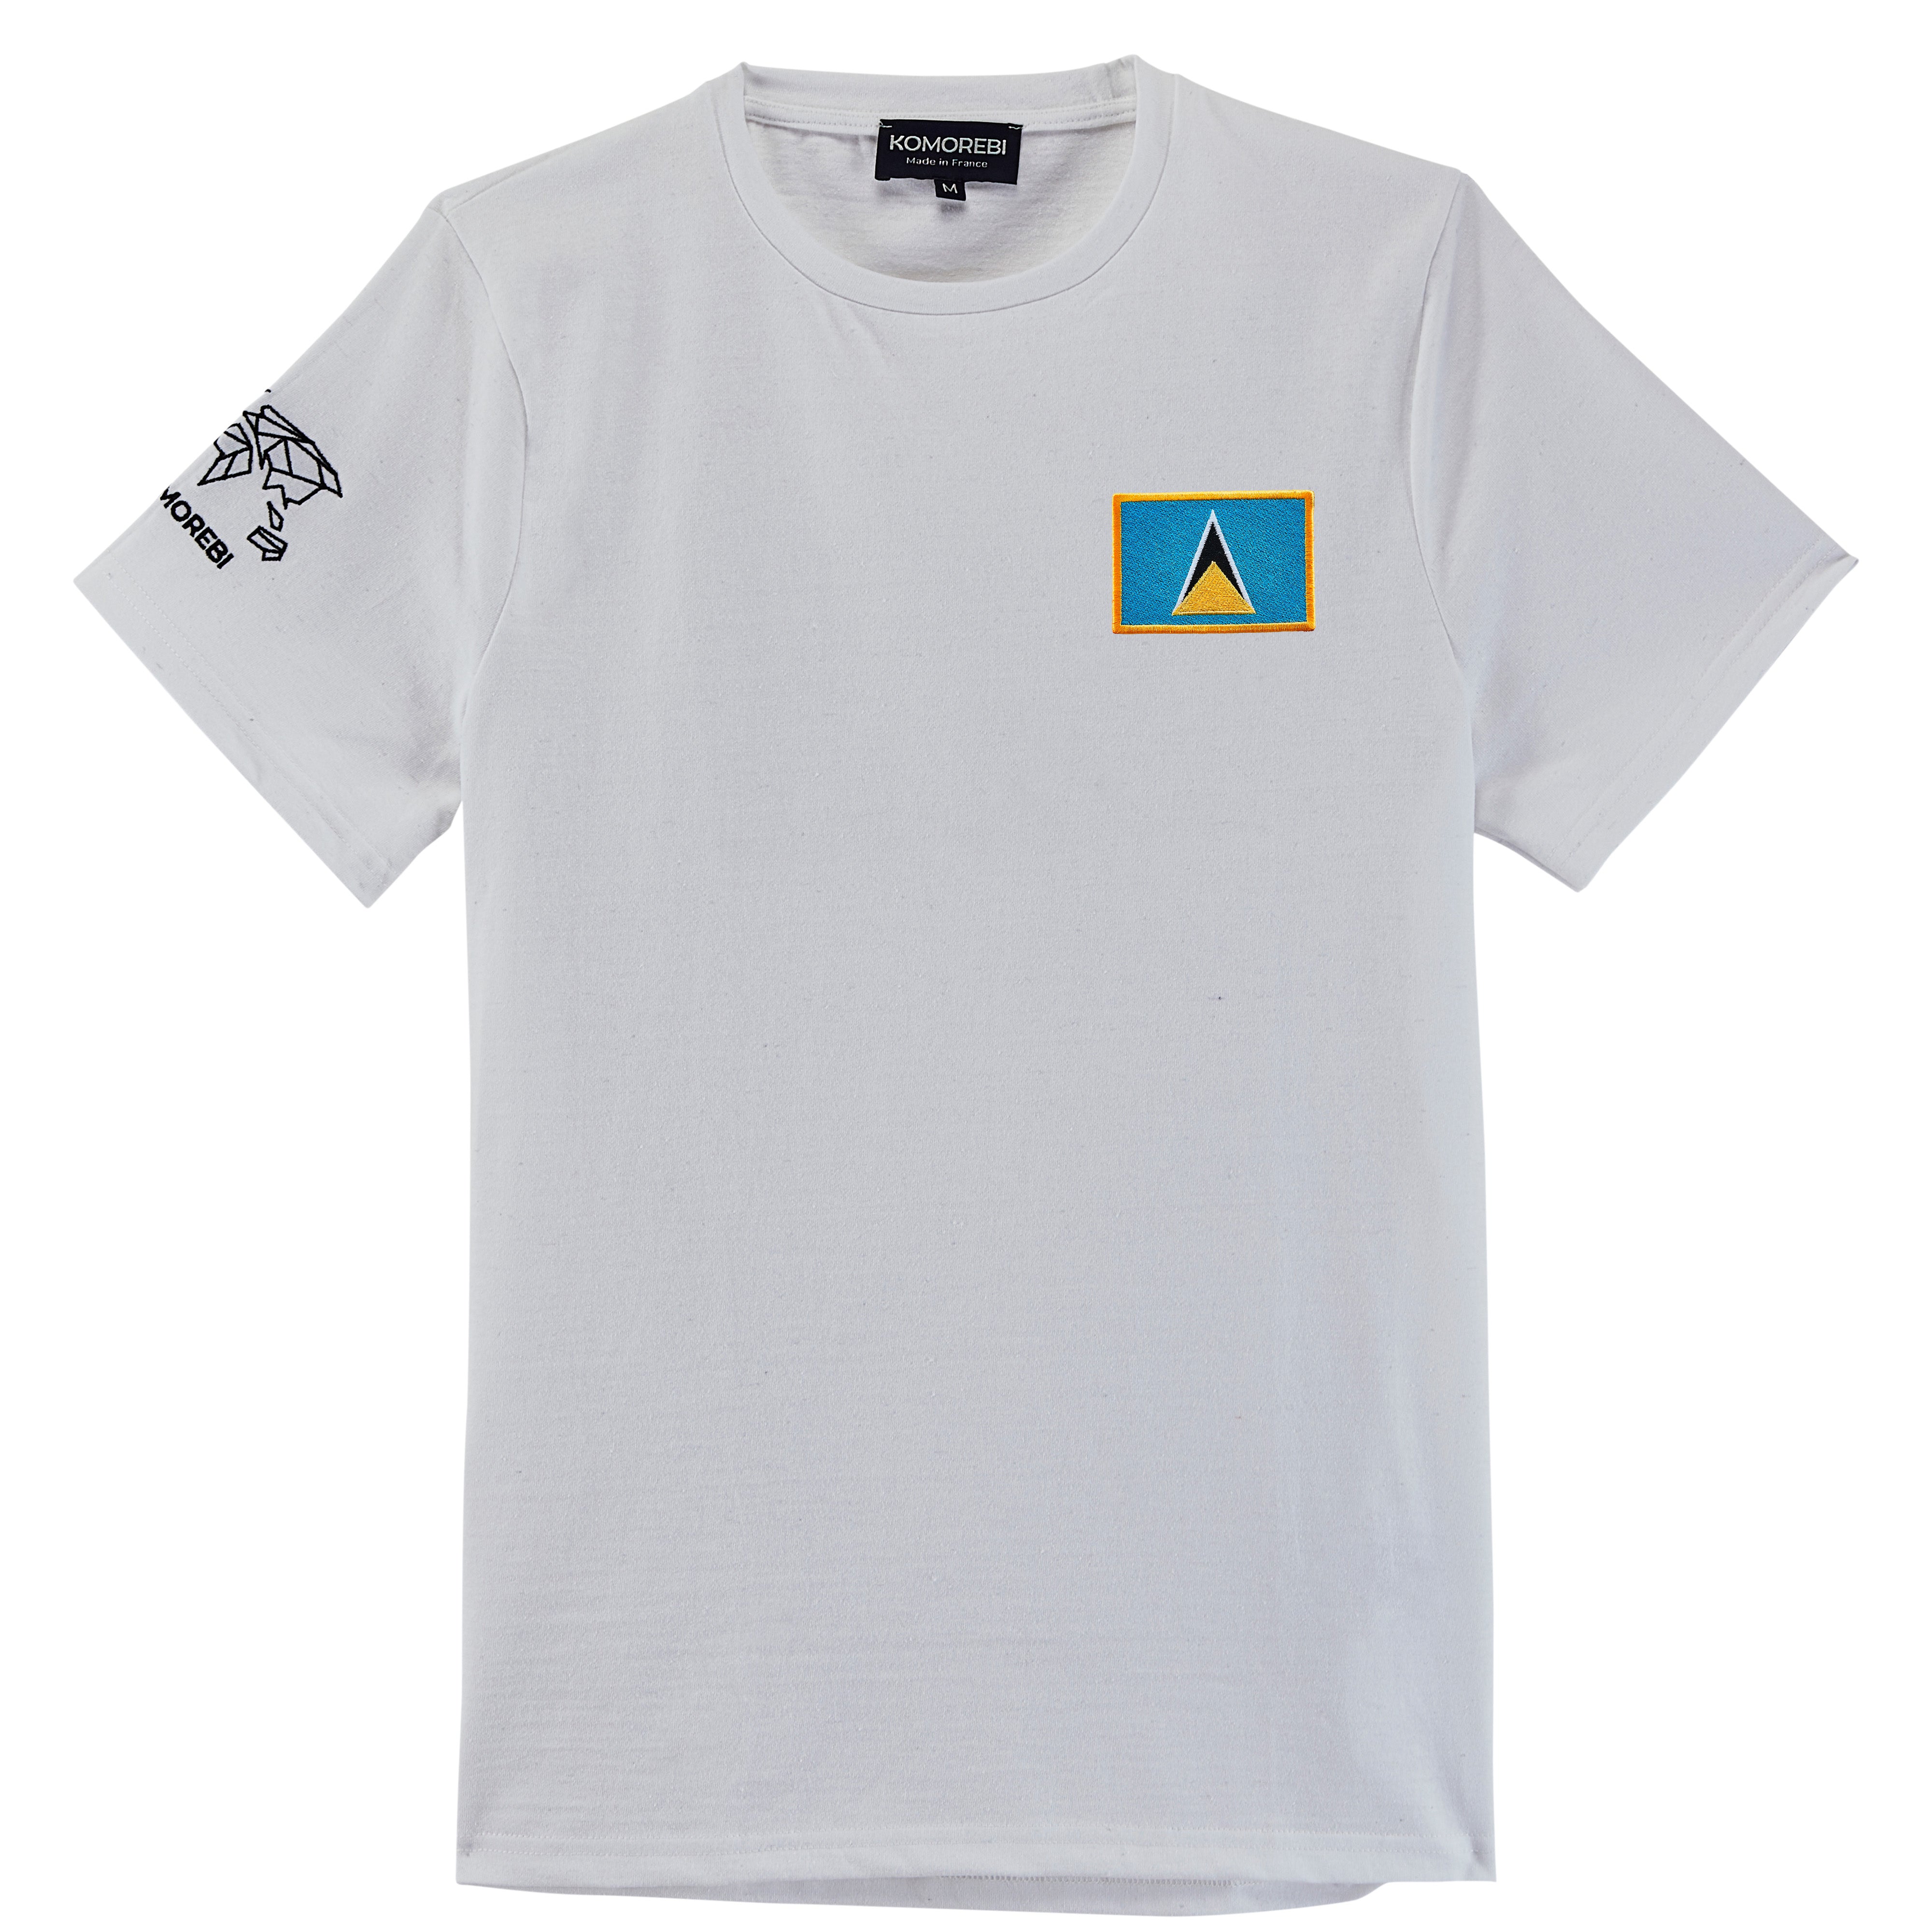 Saint Lucia • T-shirt – Komorebi